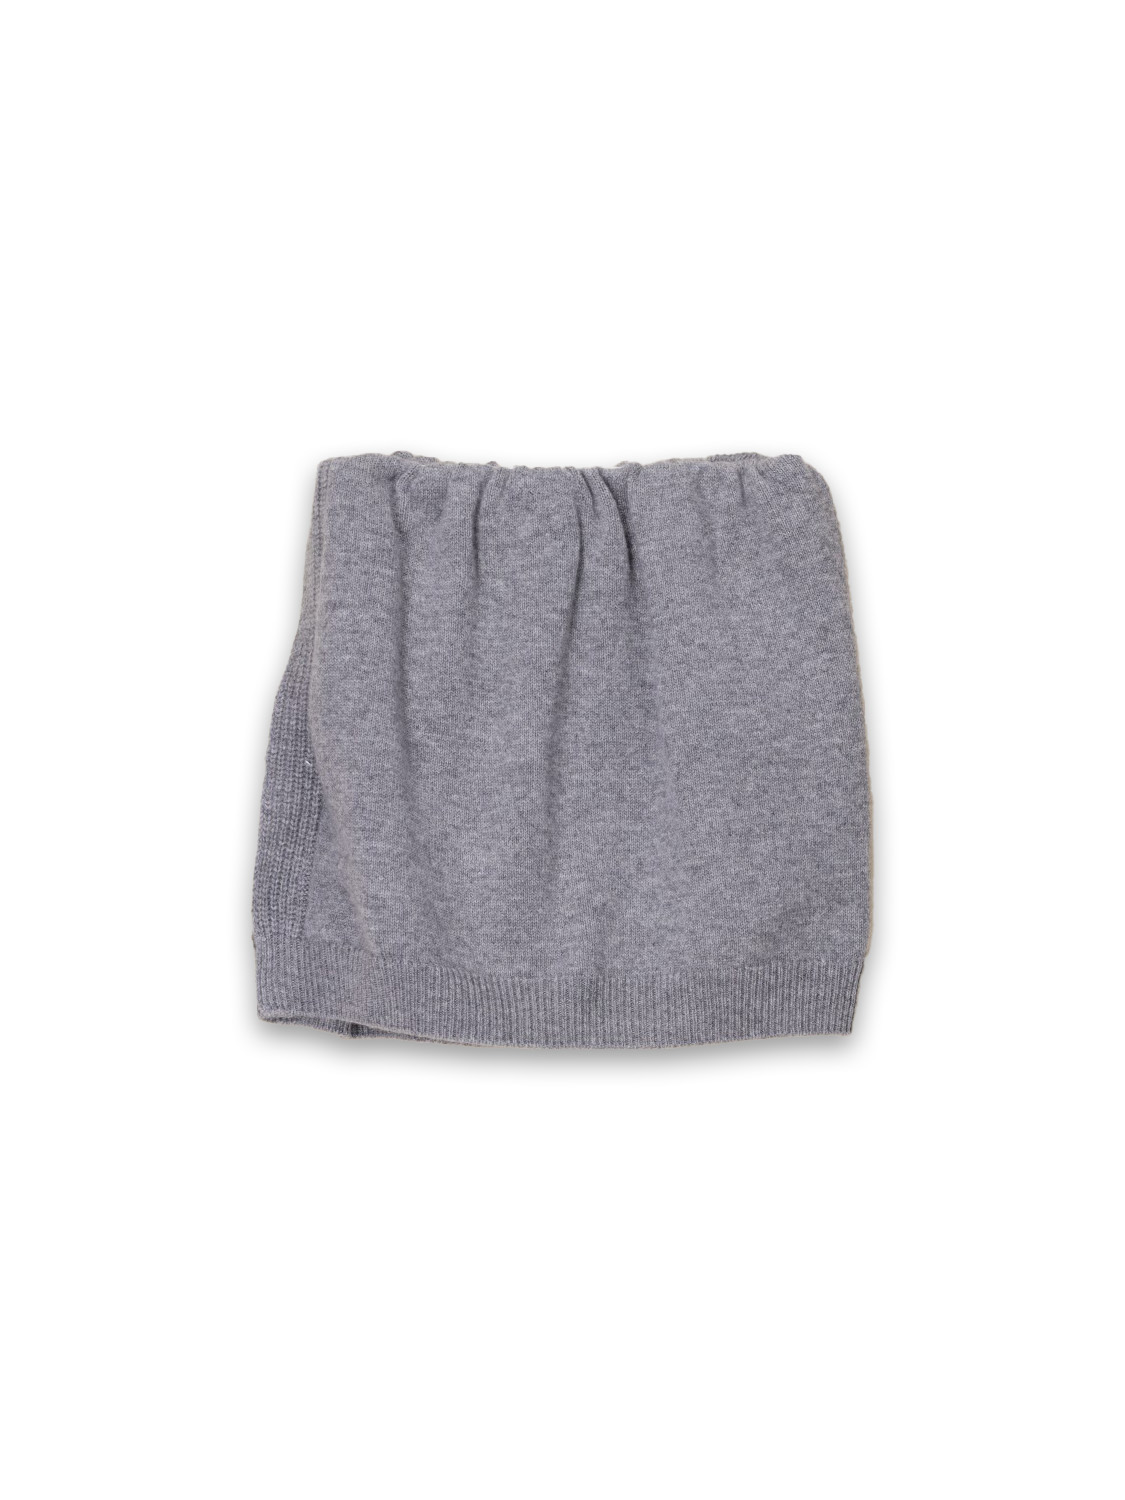 SA SU PHI  Cash – Cashmere mini skirt  hellgrau 34